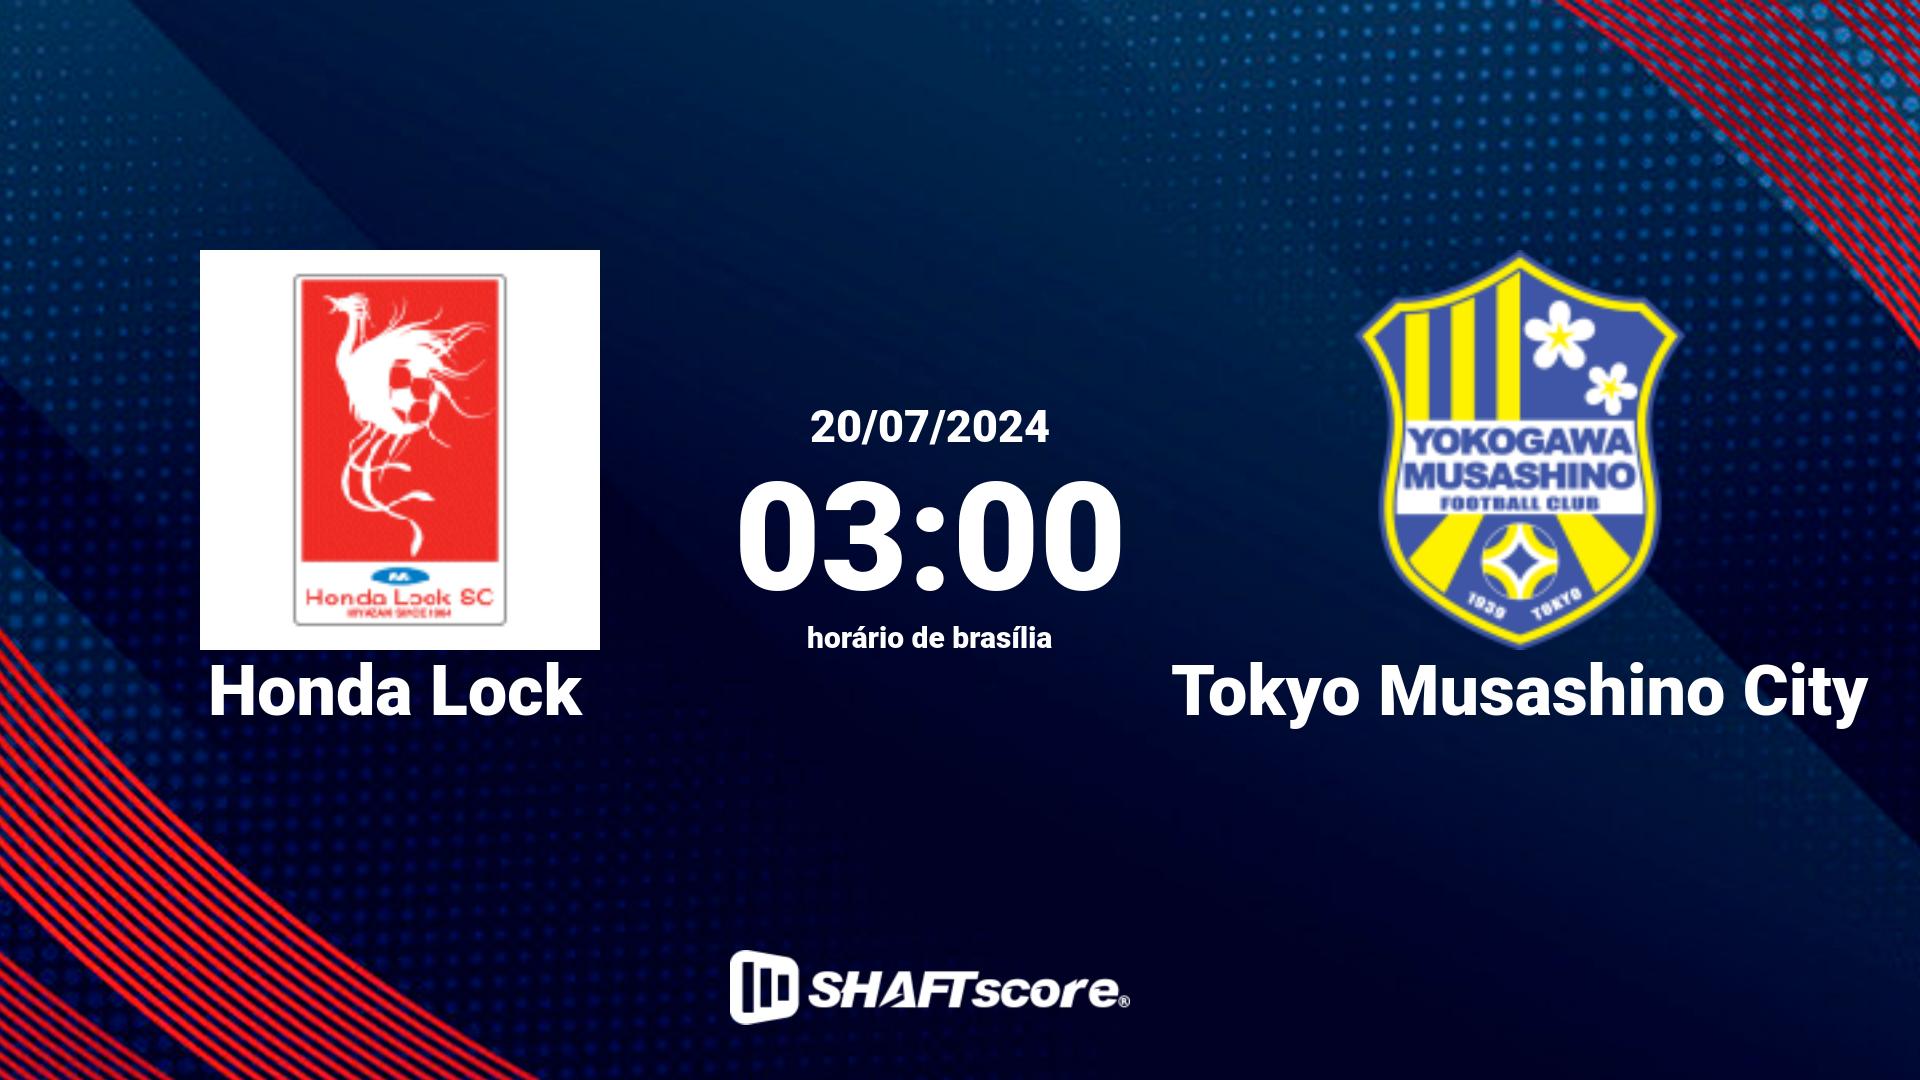 Estatísticas do jogo Honda Lock vs Tokyo Musashino City 20.07 03:00